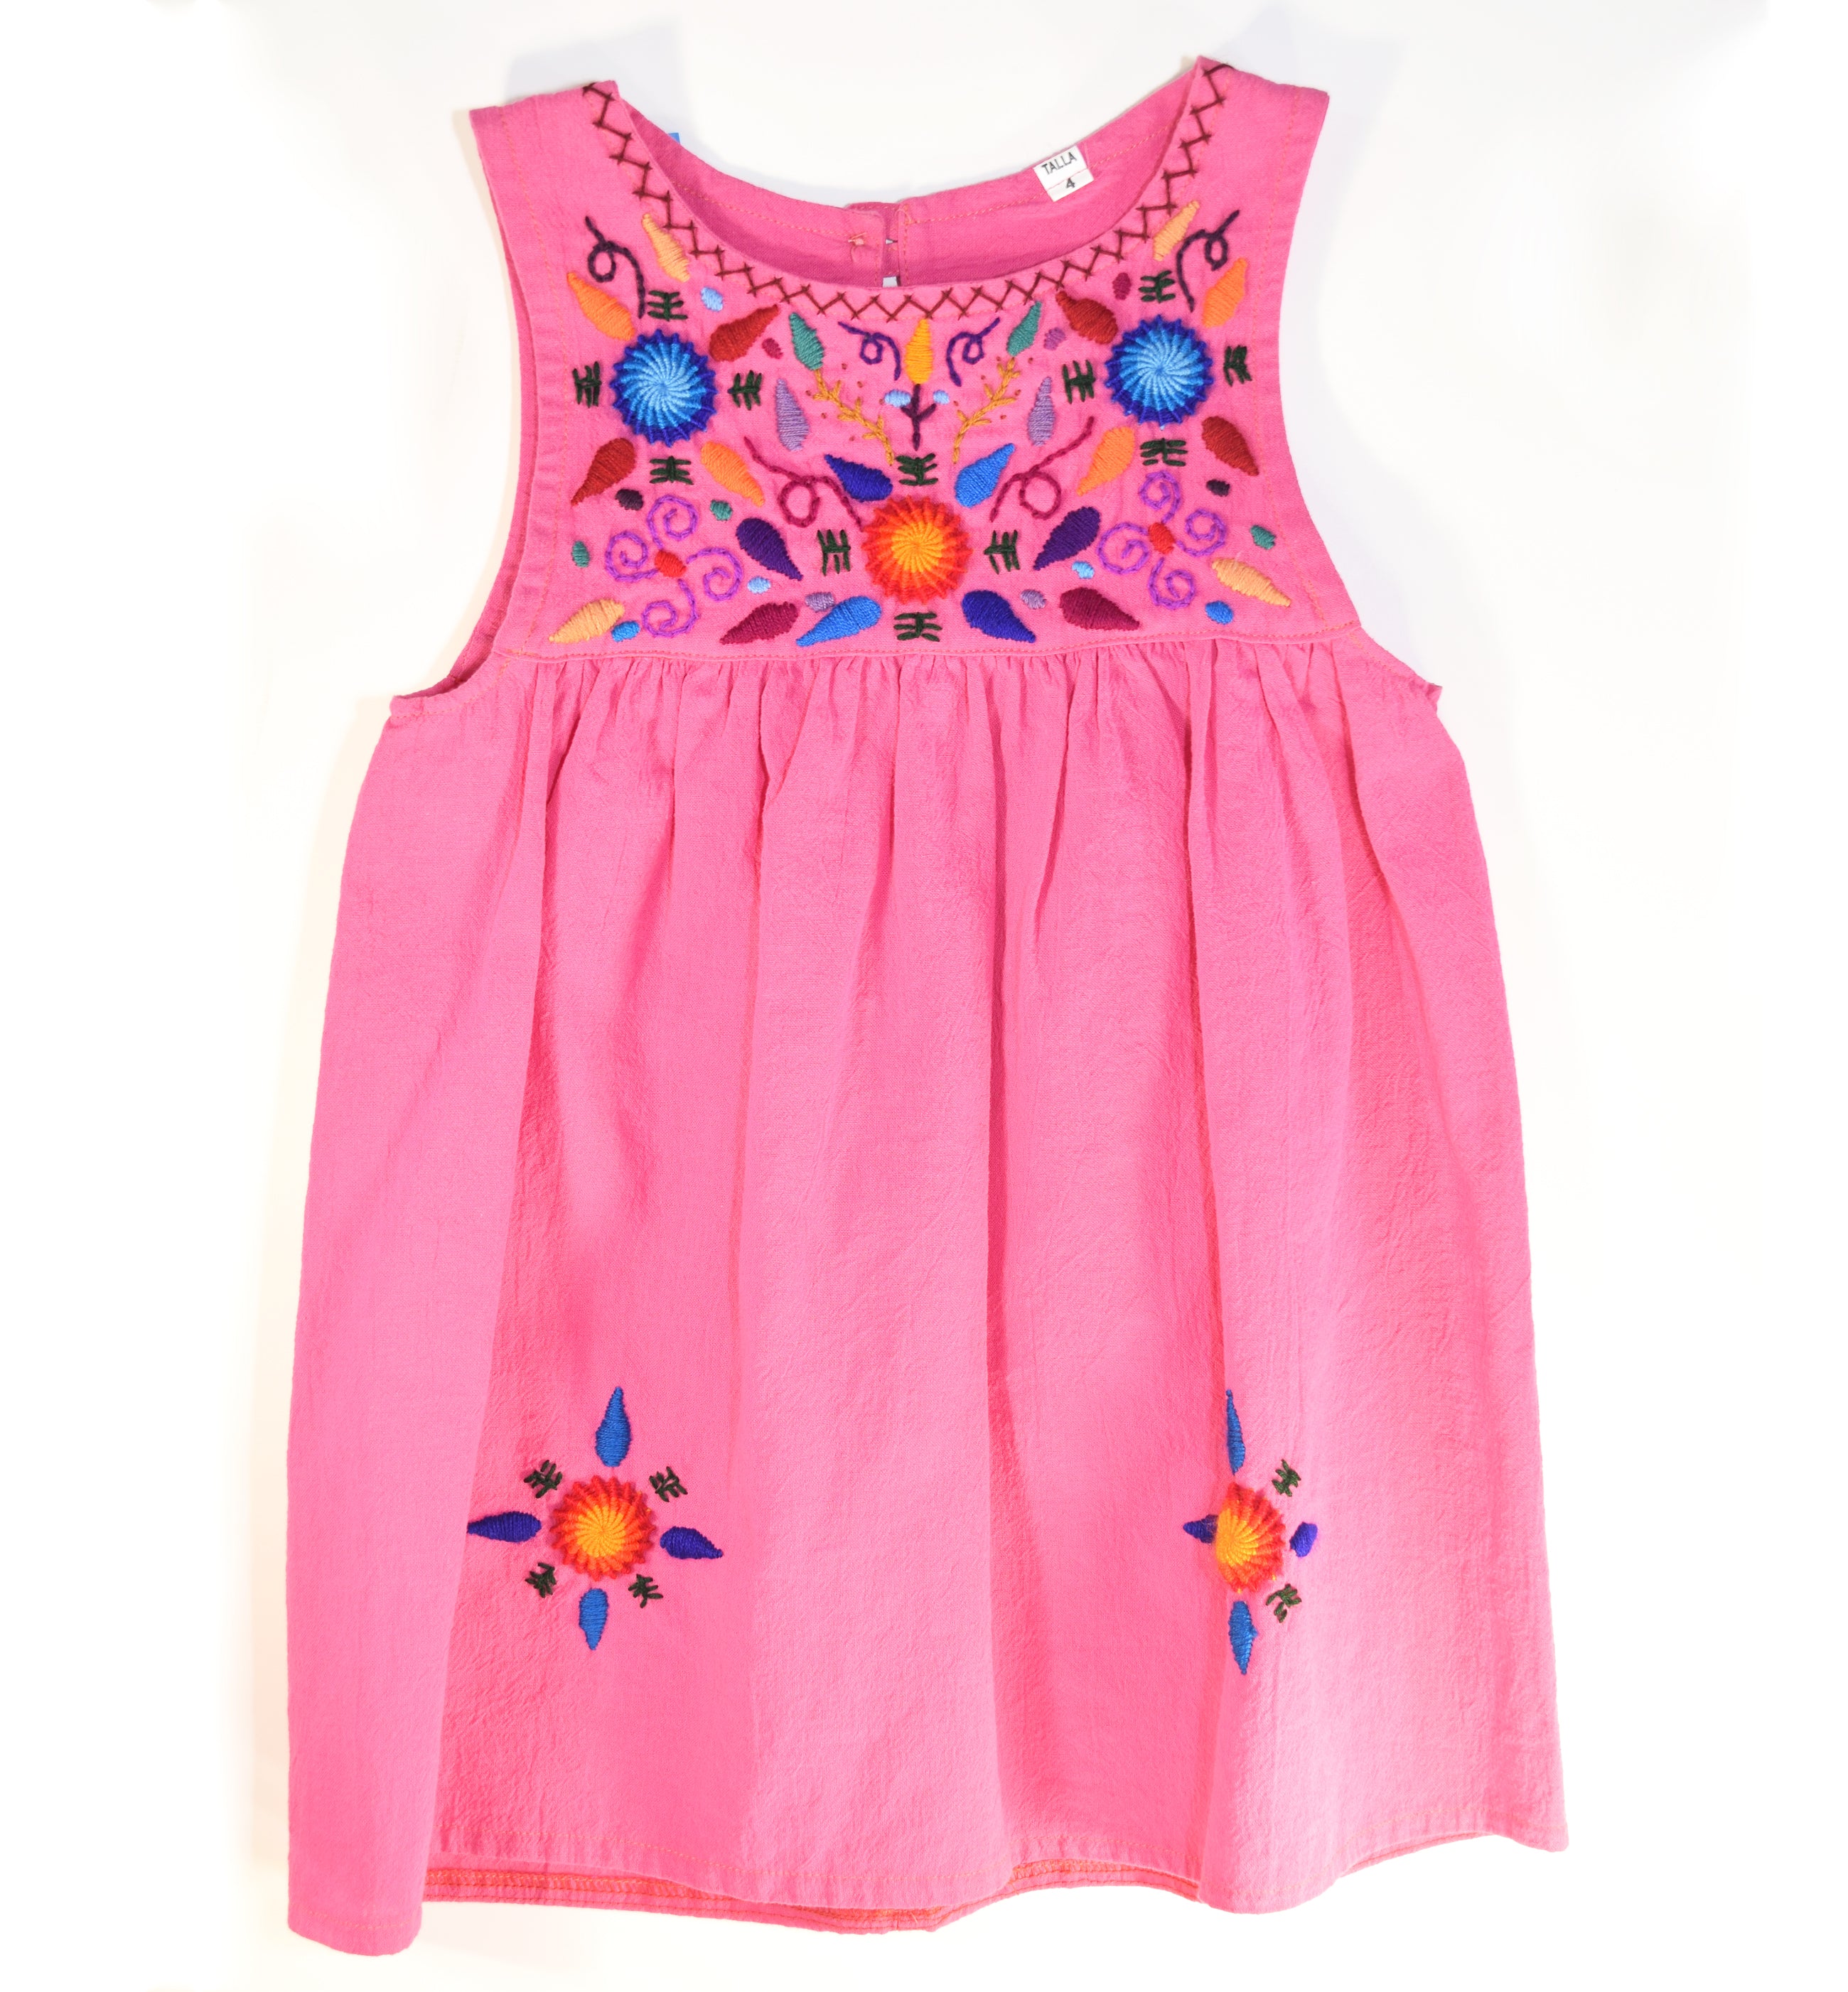 Studio Maya Kids Embroidered Cotton Dress Pink 